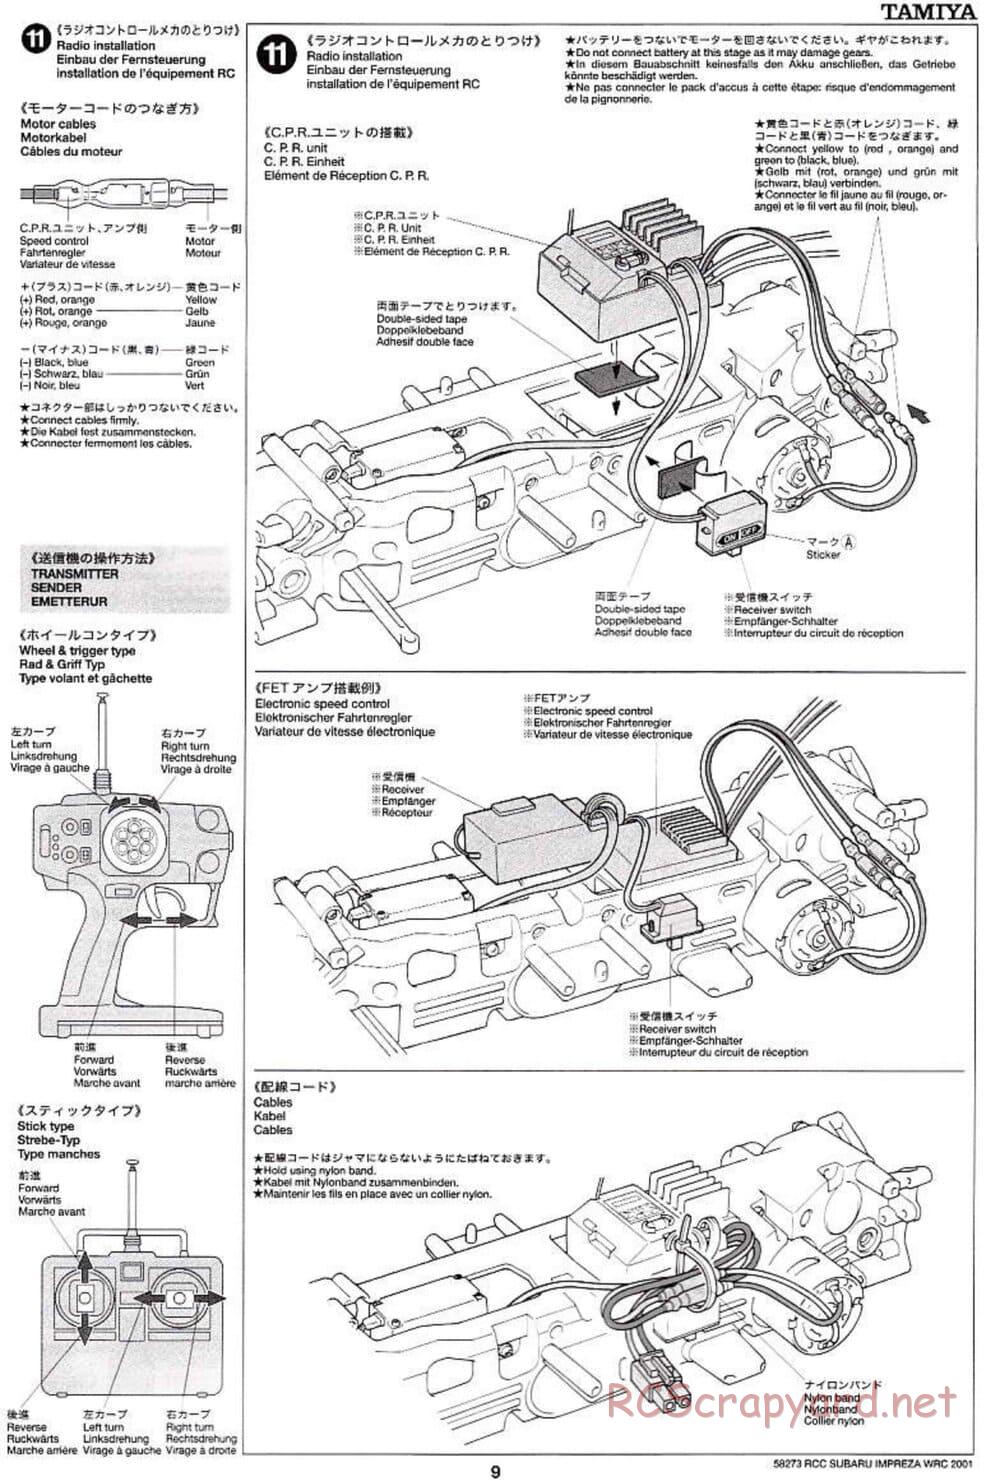 Tamiya - Subaru Impreza WRC 2001 - TL-01 Chassis - Manual - Page 9